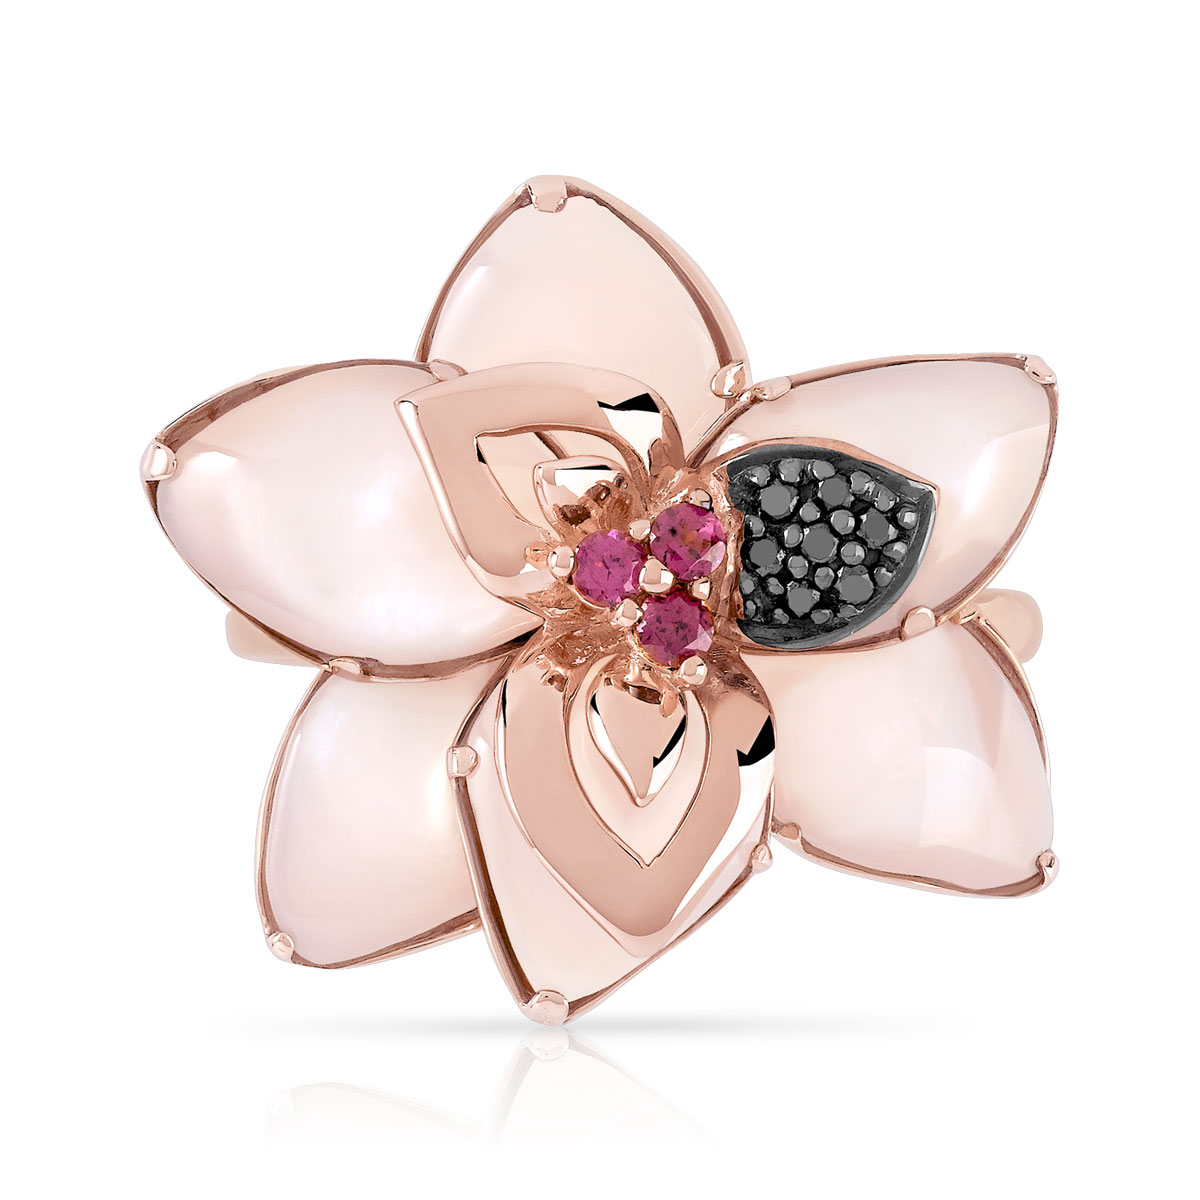 Bague or 375 rose fleur grenats rhodolites diamants et nacre rose - vue 3